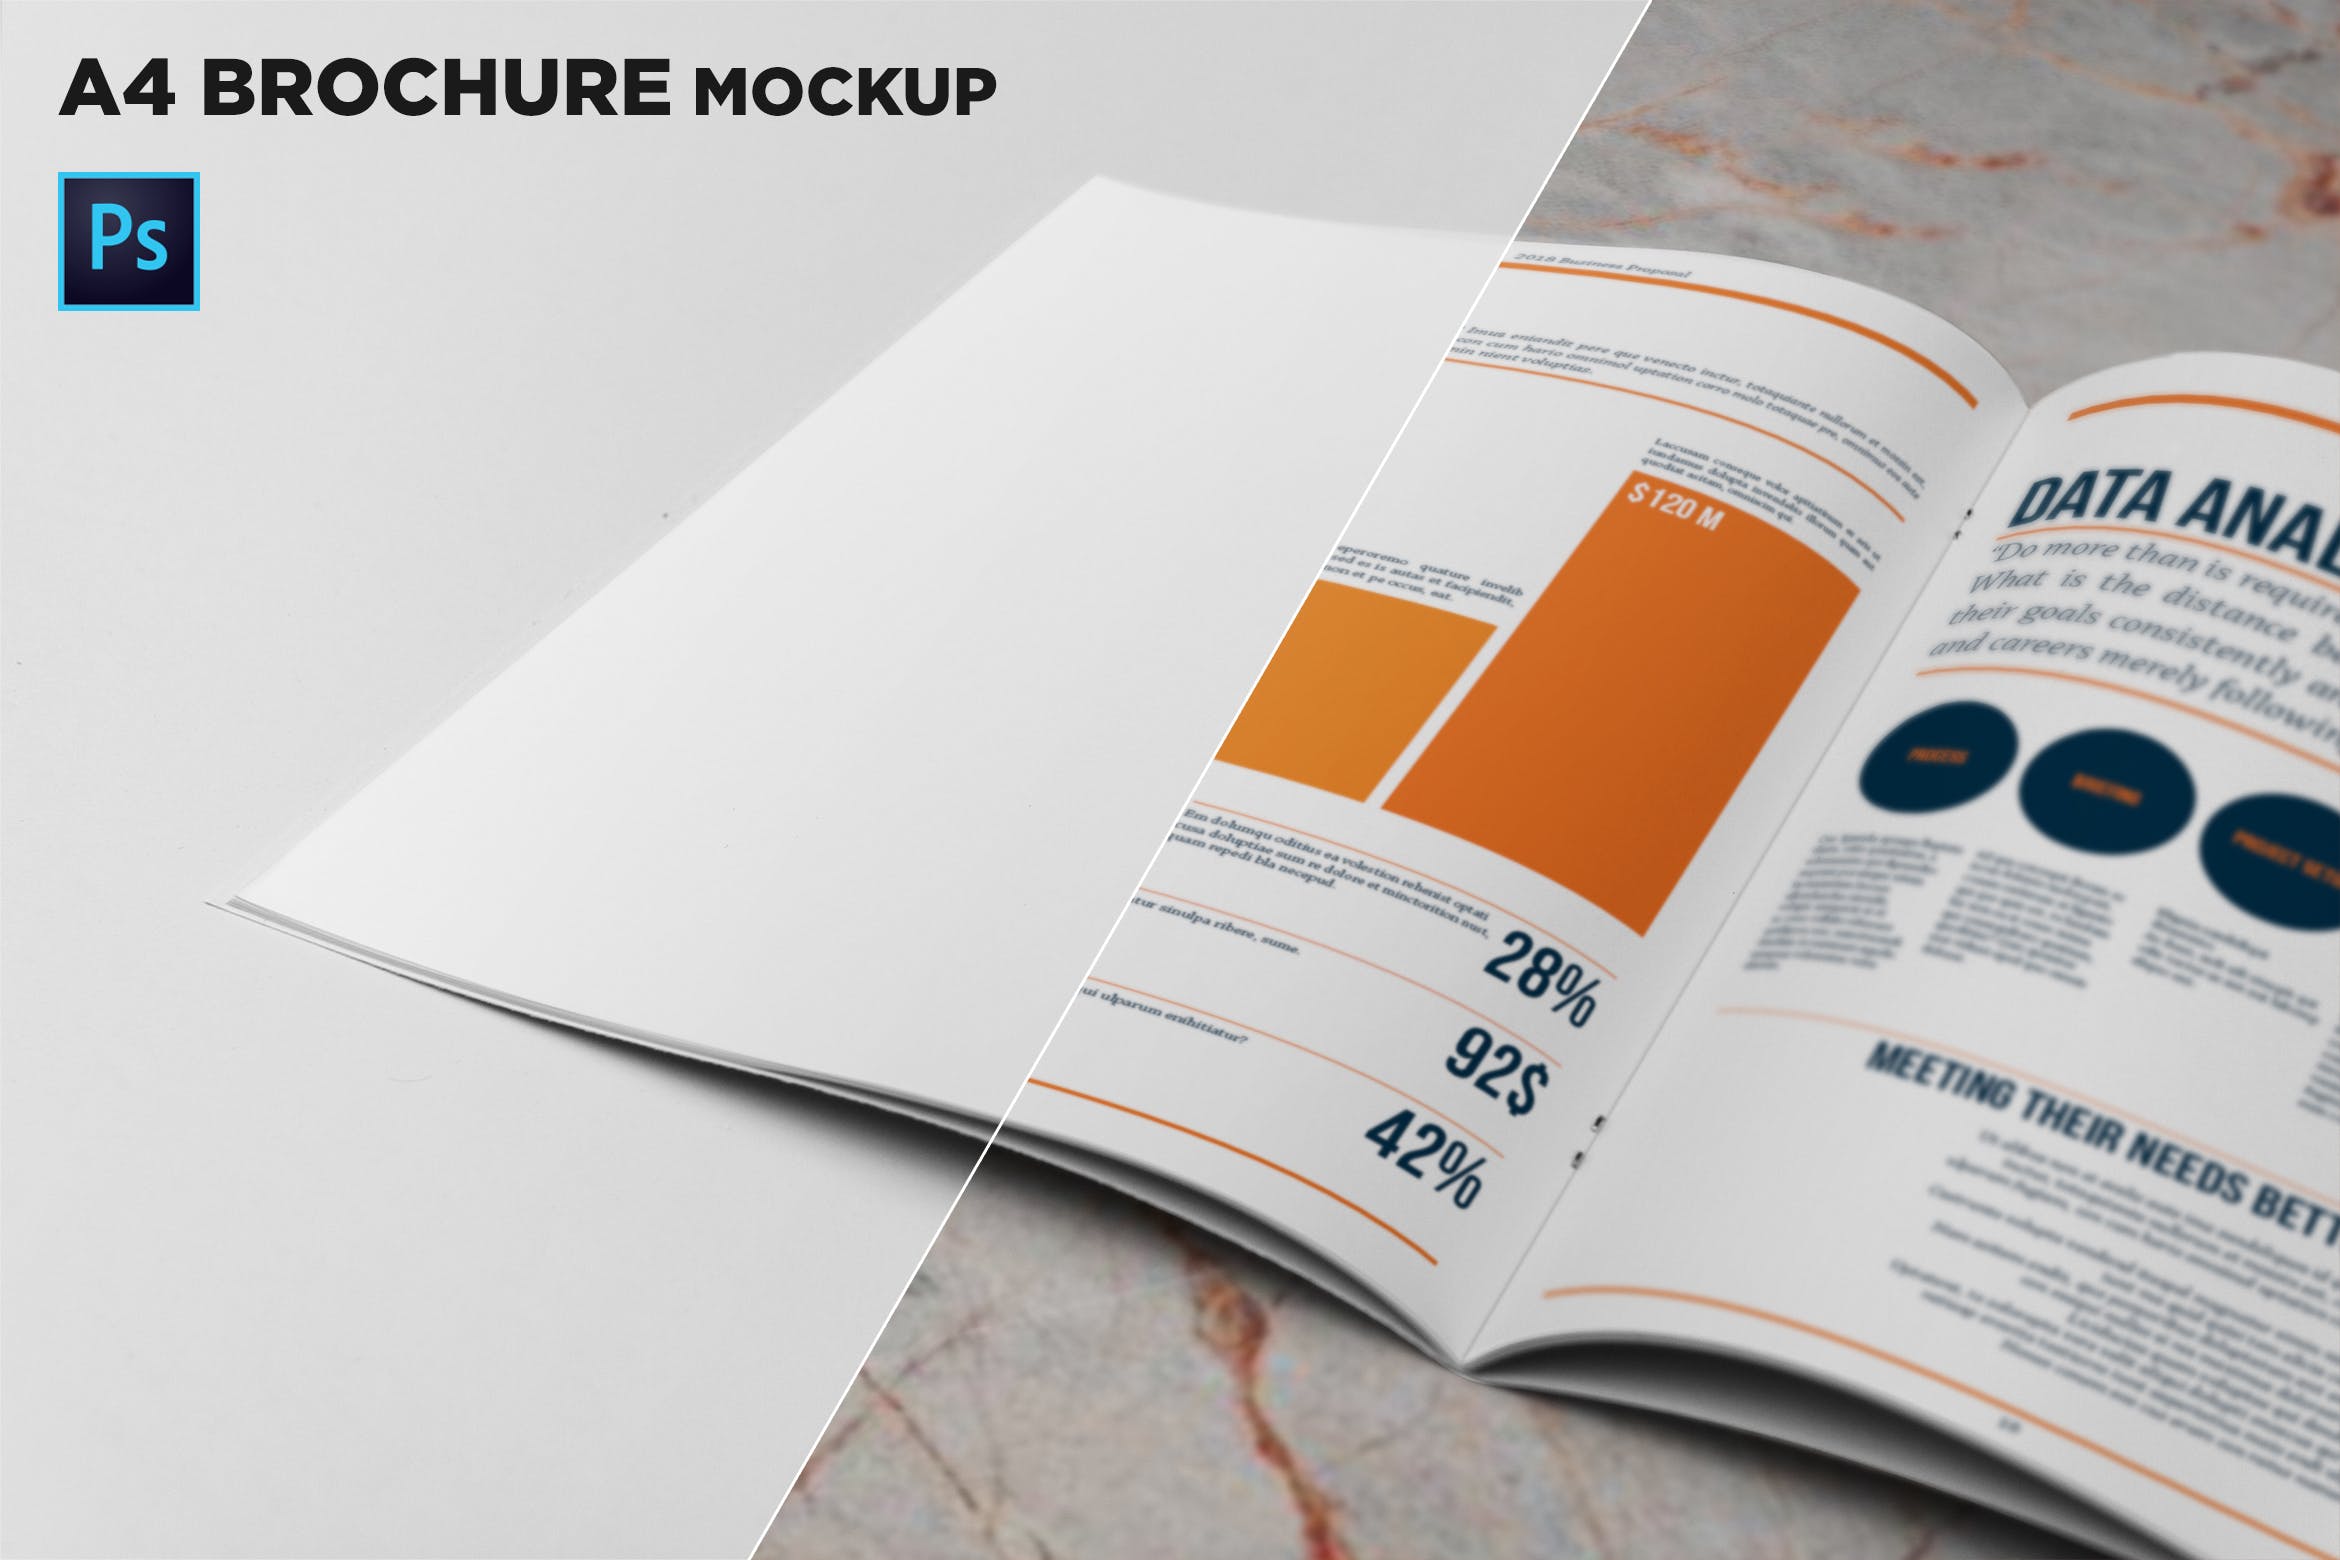 A4尺寸企业/品牌宣传册特写样机第一素材精选模板 A4 Brochure Closeup Mockup插图